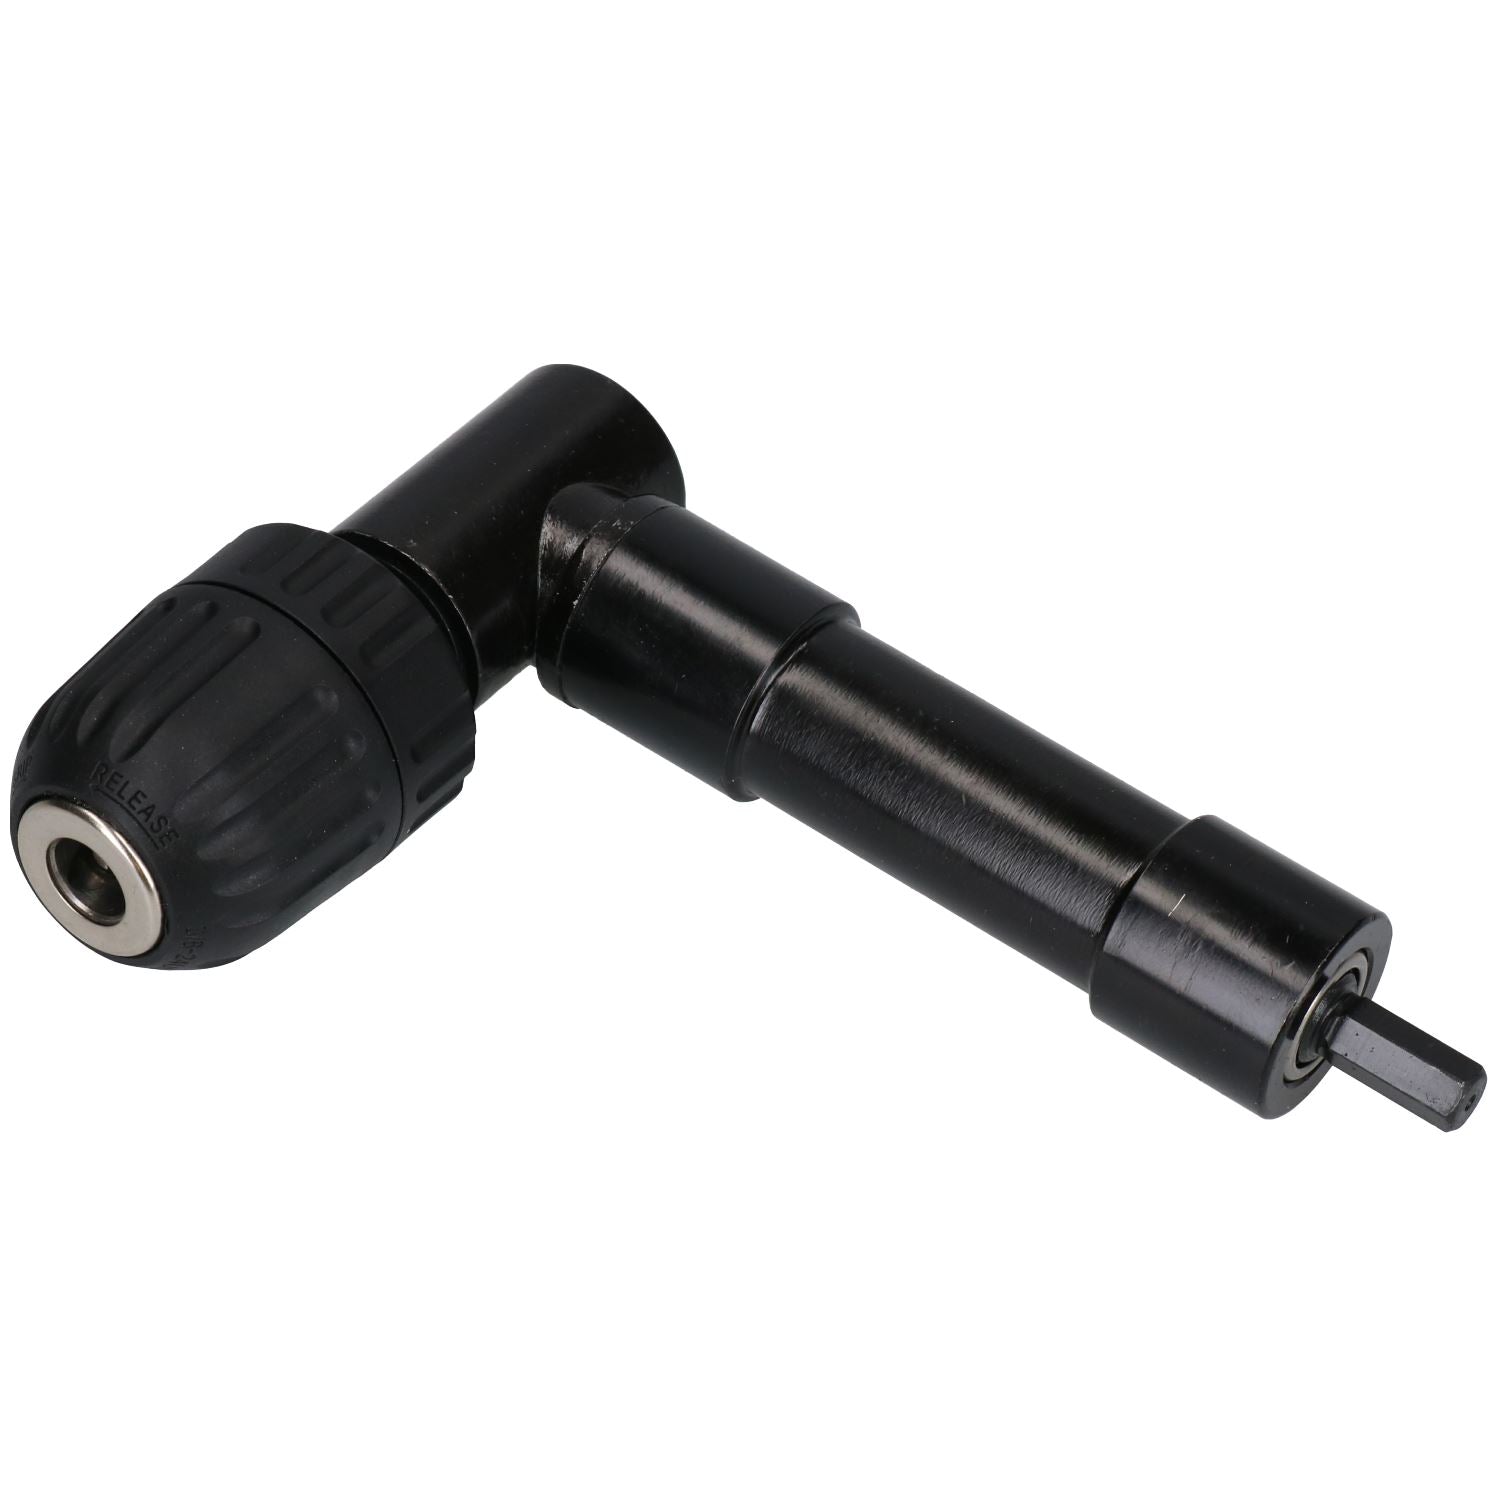 Aluminium Right Angle Drill Attachment Bit 3/8" Chuck Key Adaptor Adapter TE311